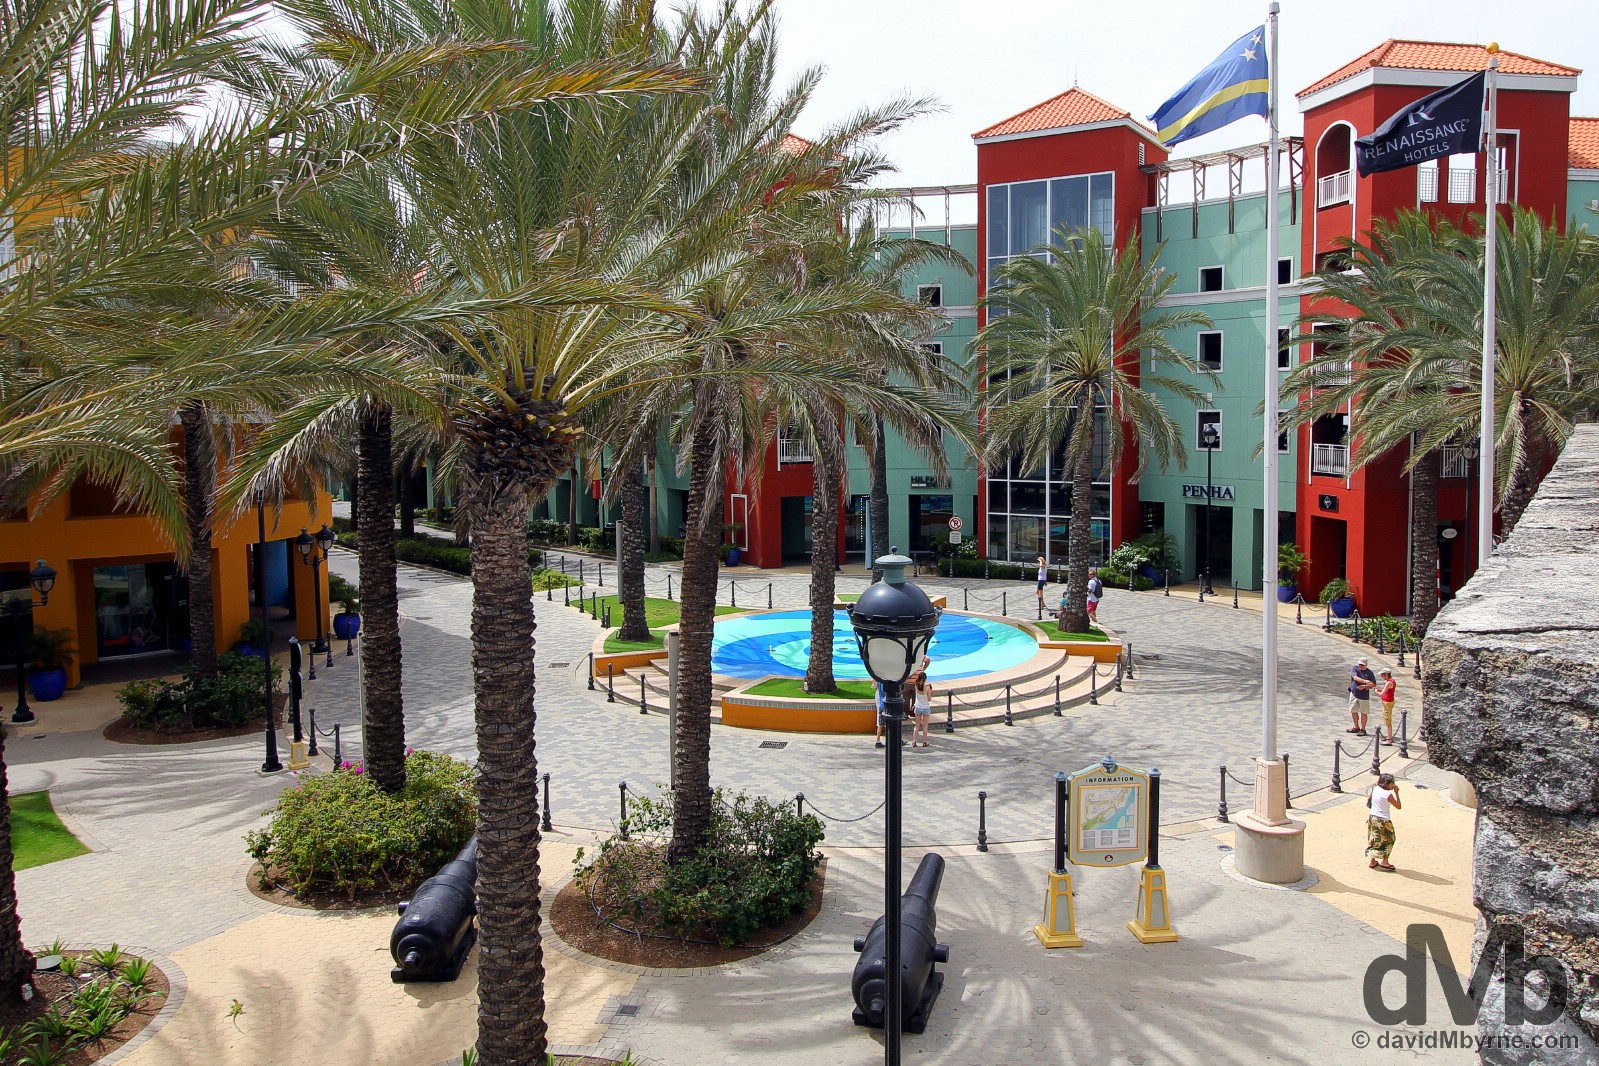 Renaissance Resort & Shopping Mall as seen from the walls of Rif Fort, Willemstad, Curacao, Lesser Antilles. June 19, 2015.